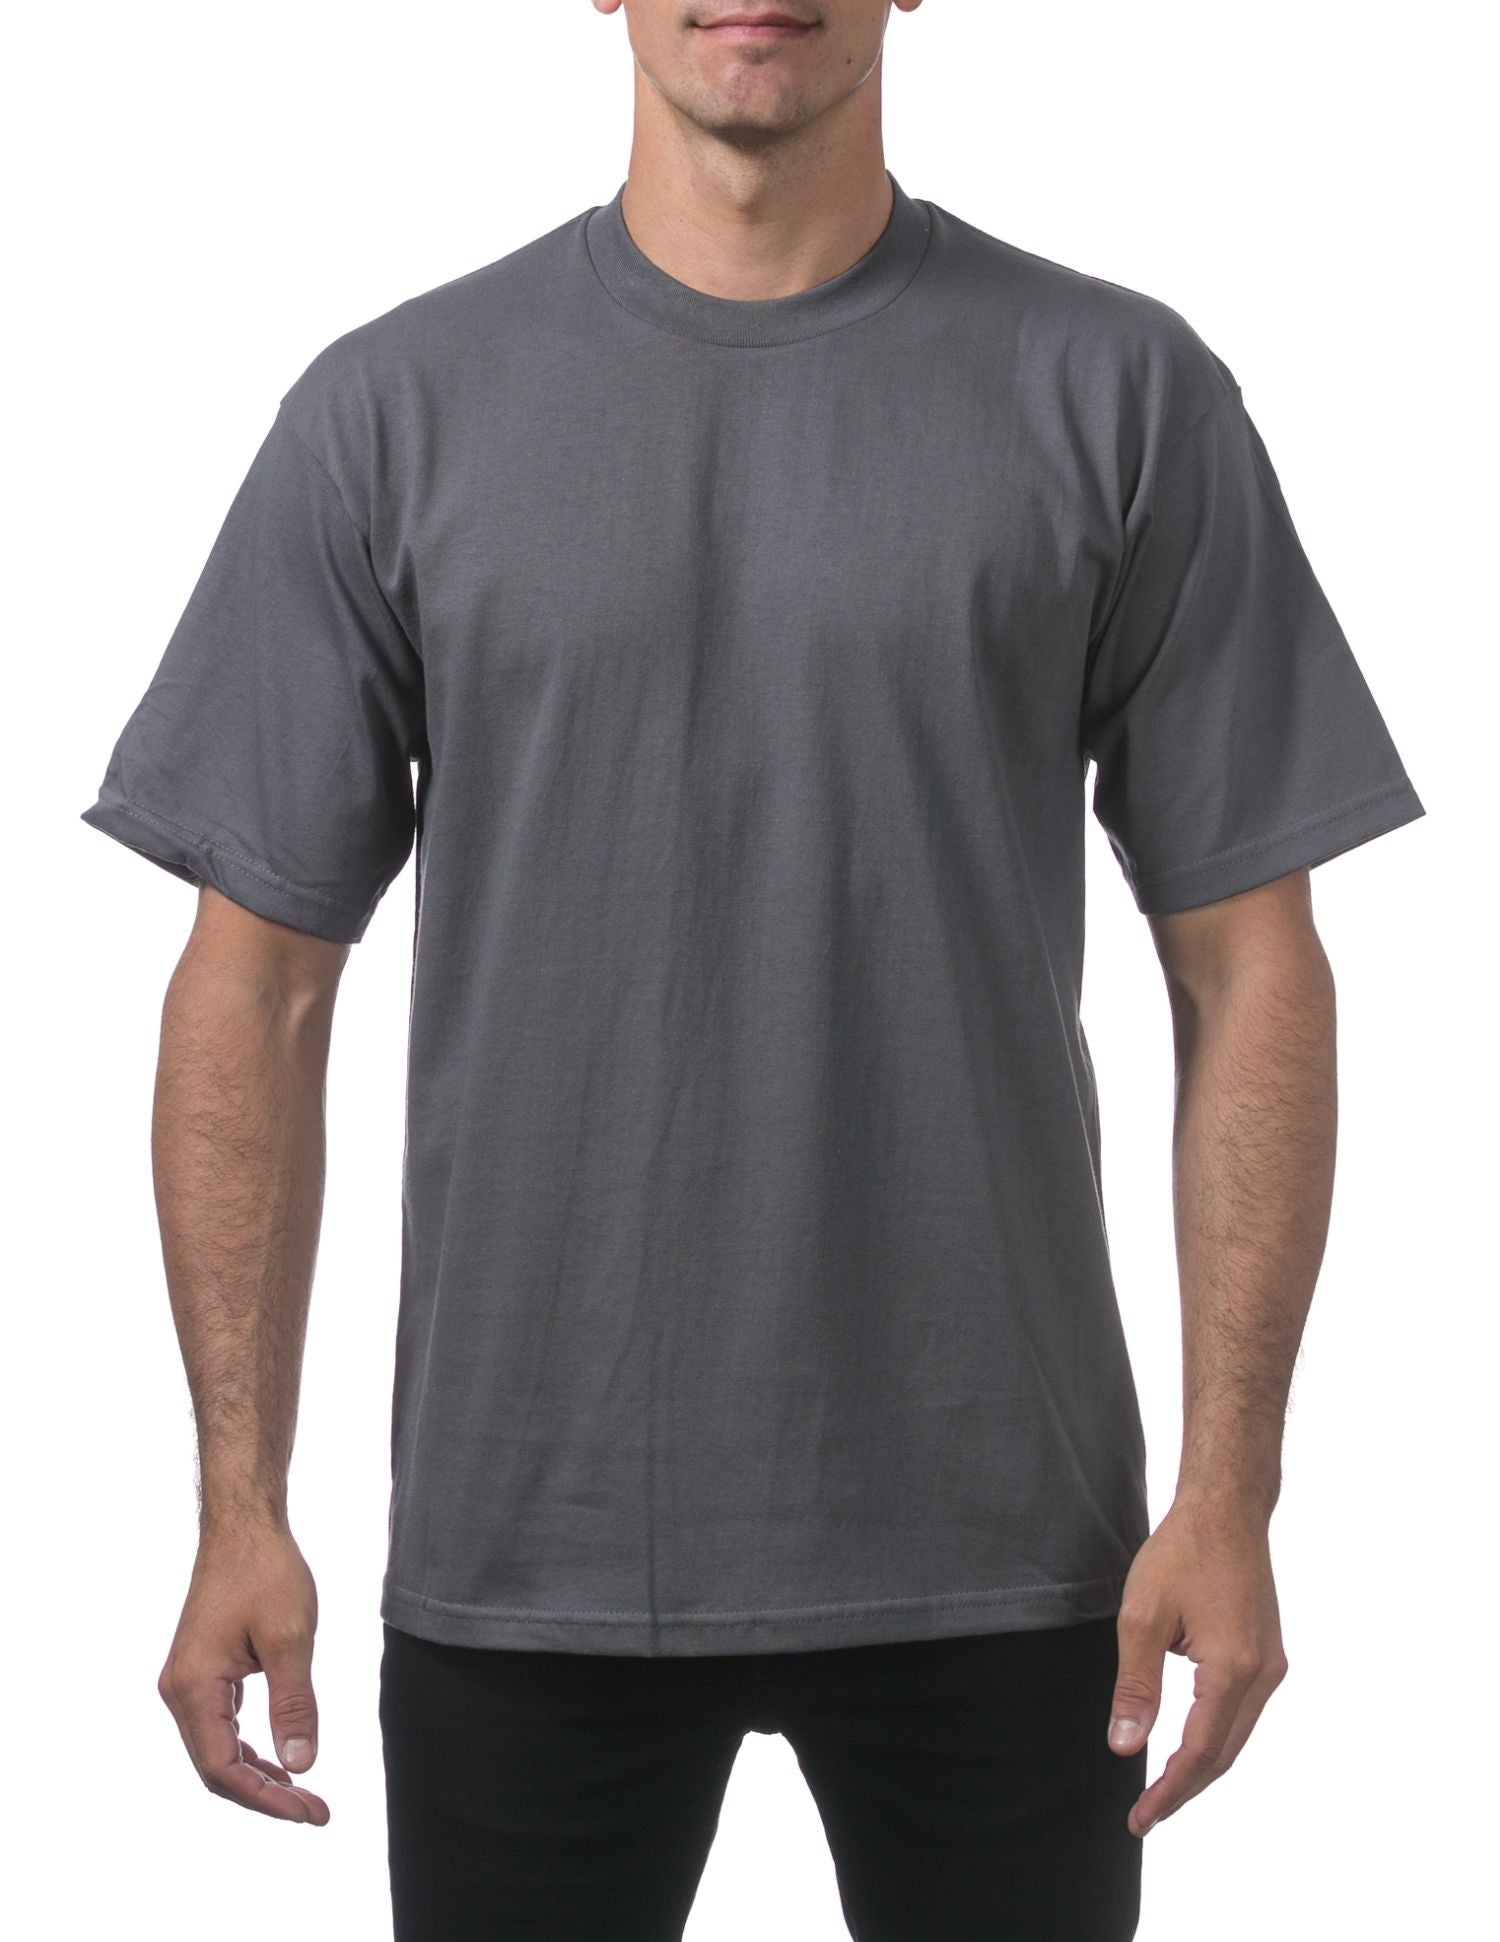 Pro Club Men's Heavywide Cotton Short Sleeve Crew Neck T-Shirt